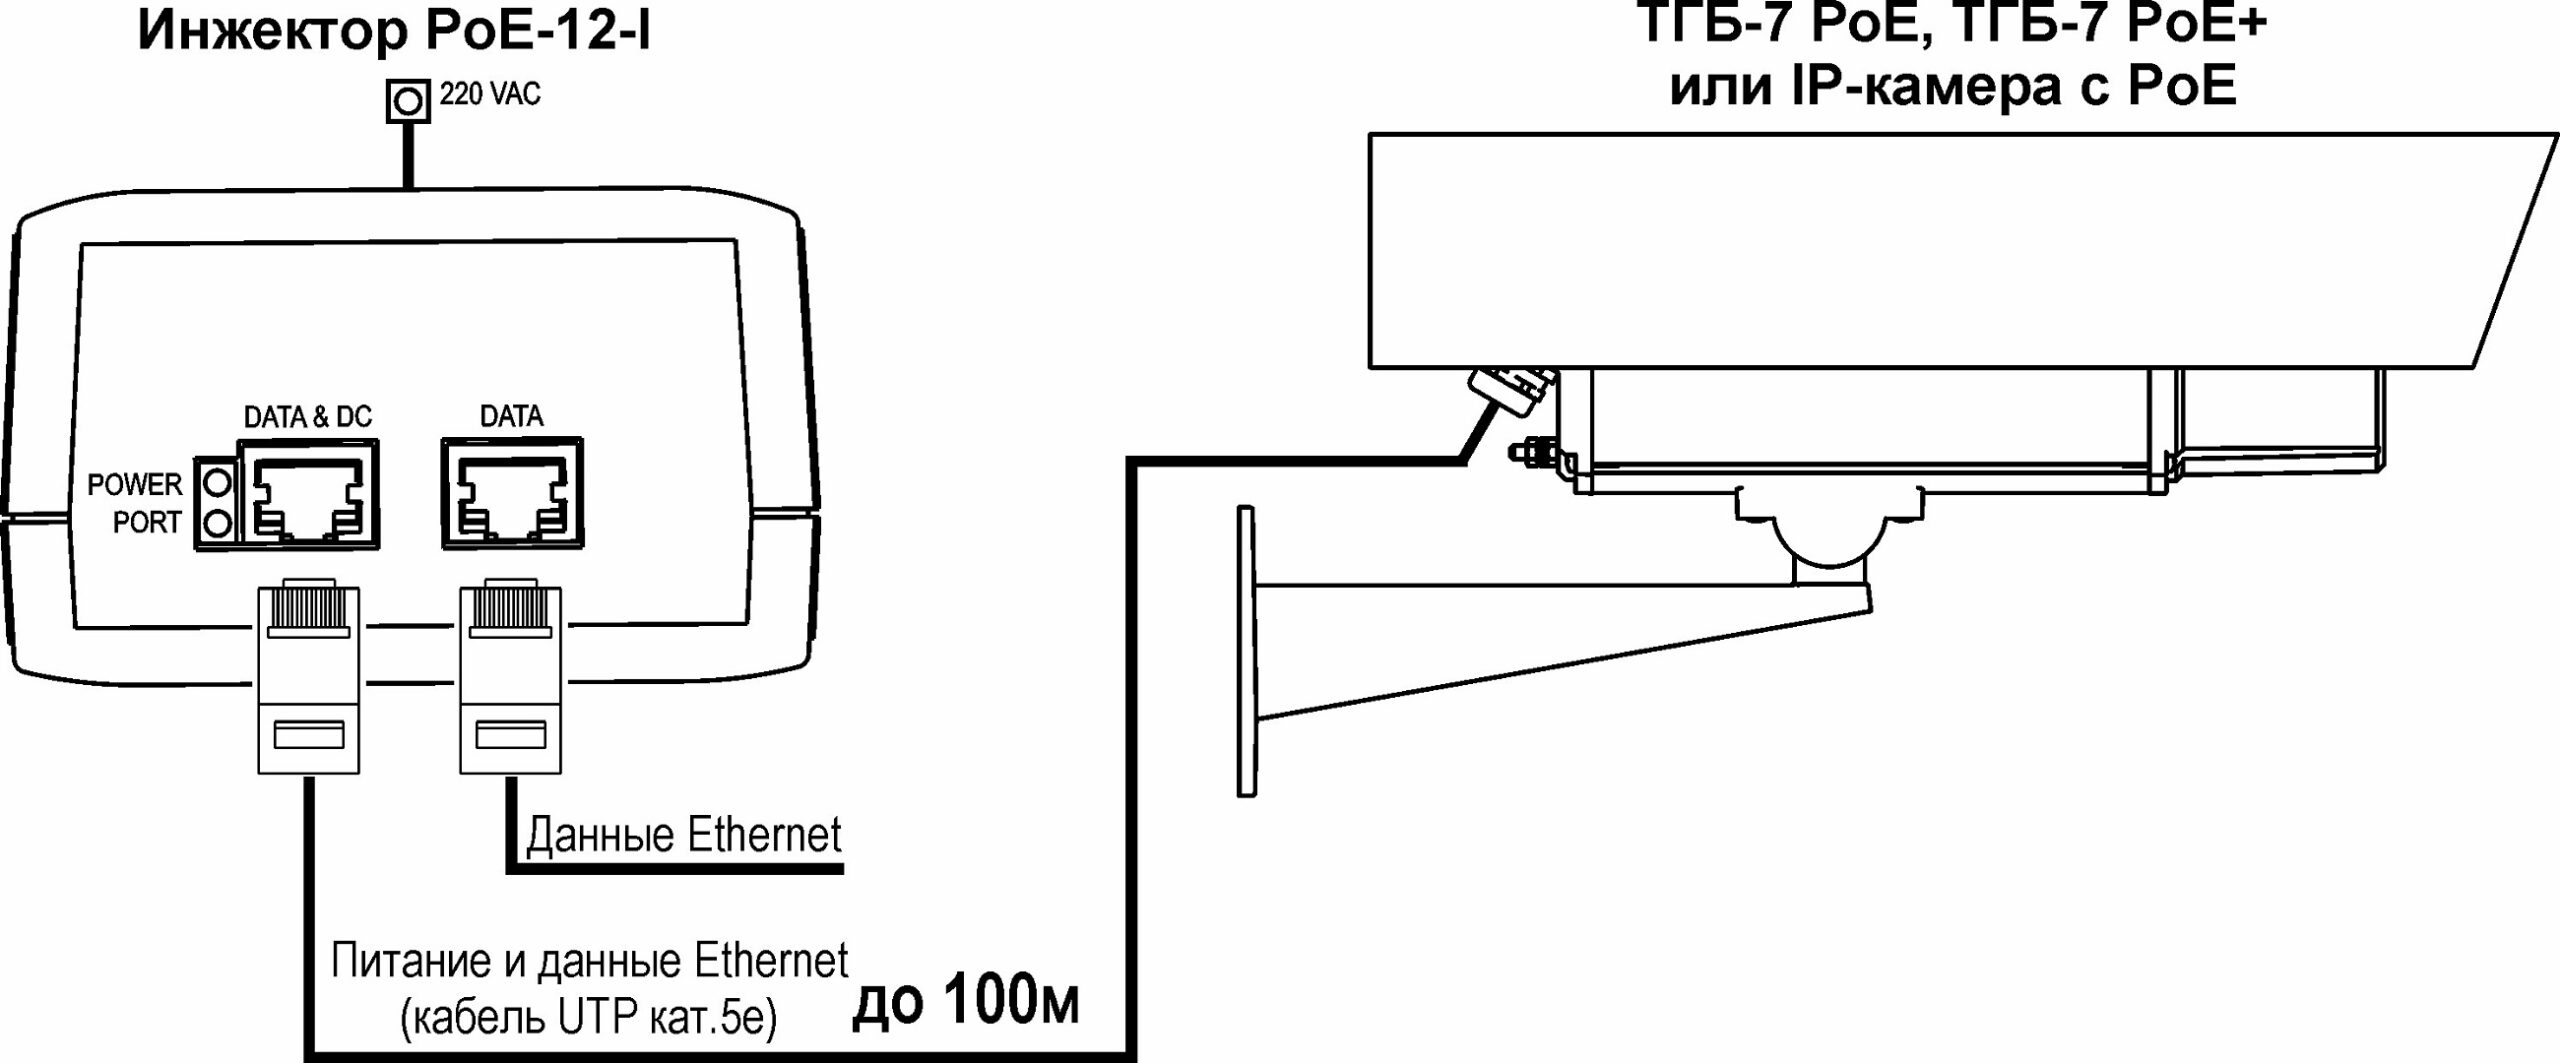 Схема подключения инжектора PoE-12-I